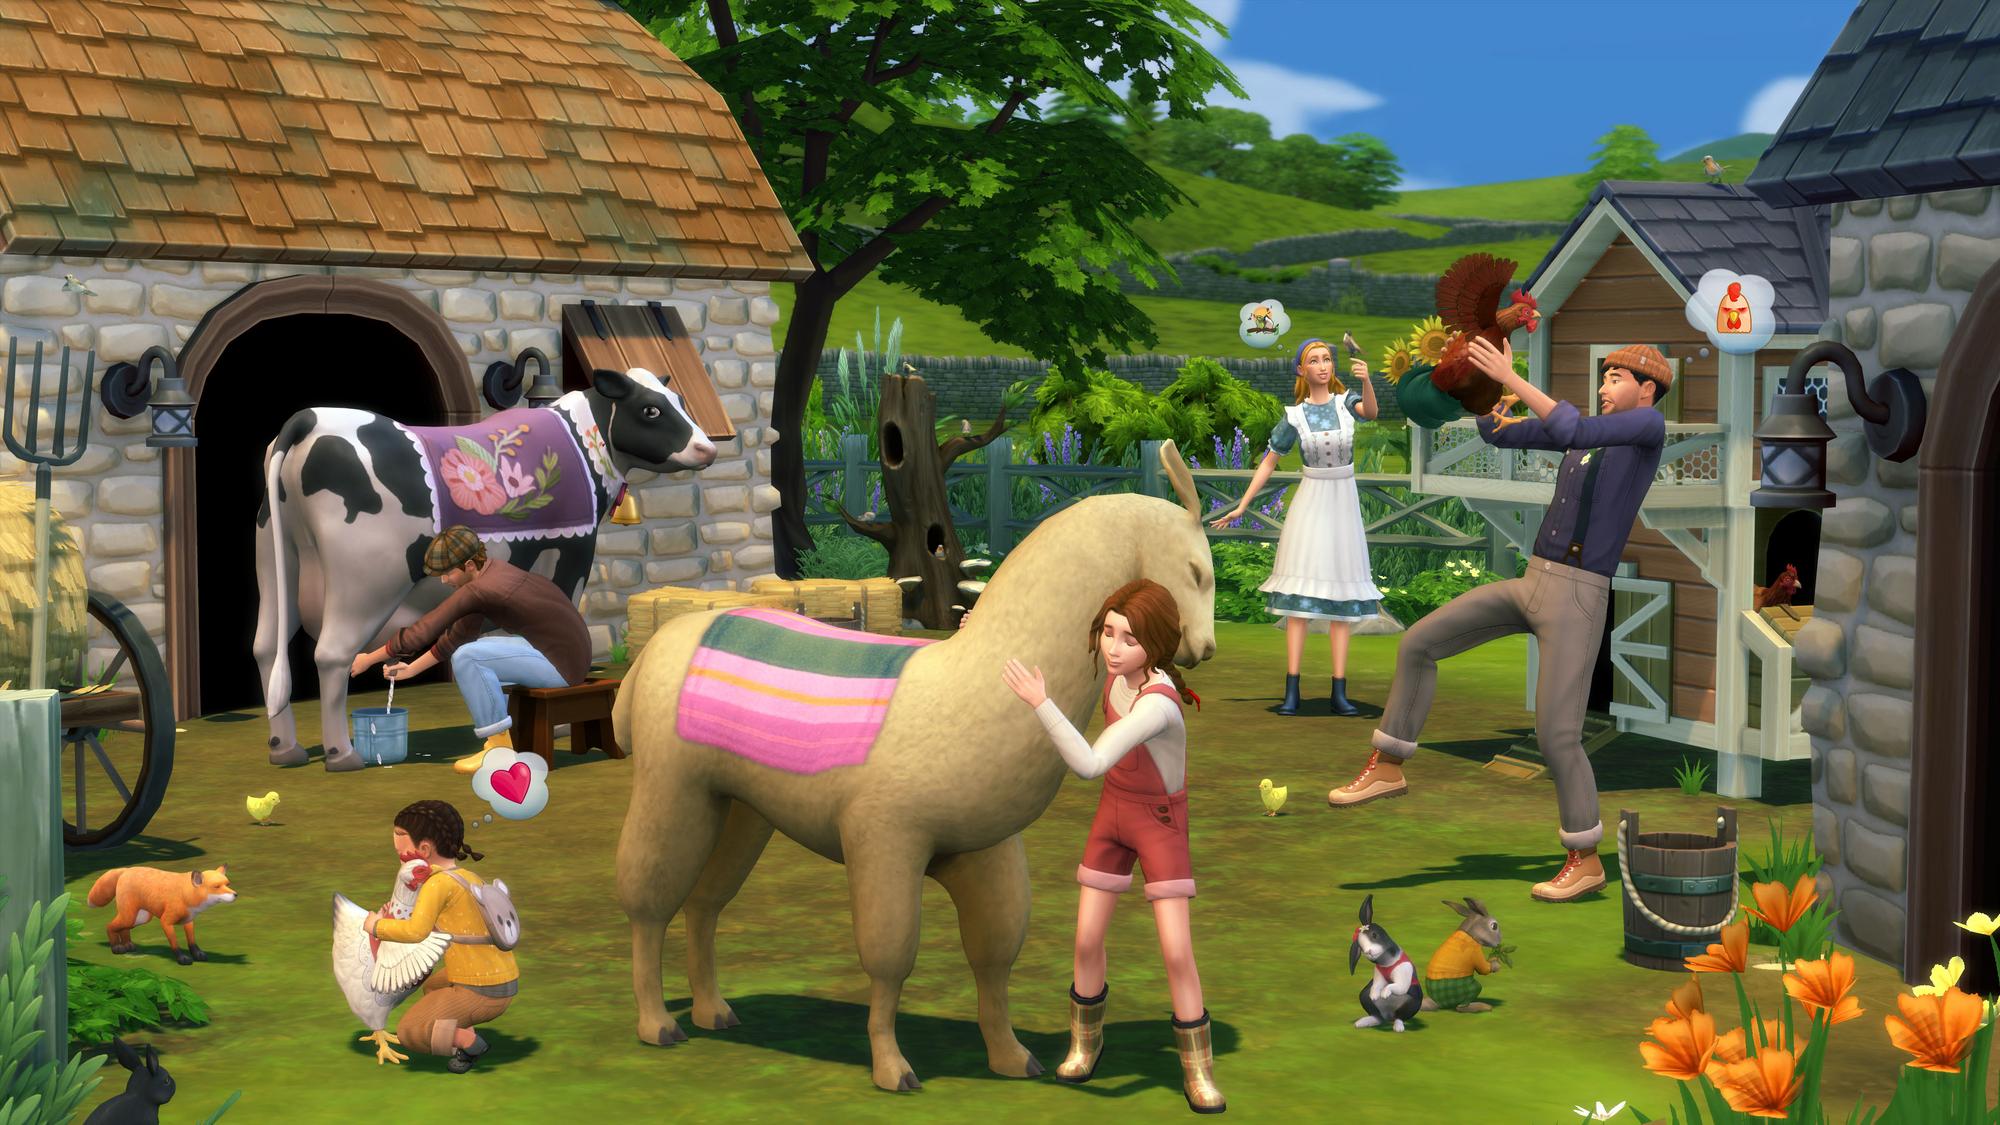 Obrázok z hry The Sims 4 Cottage Living.